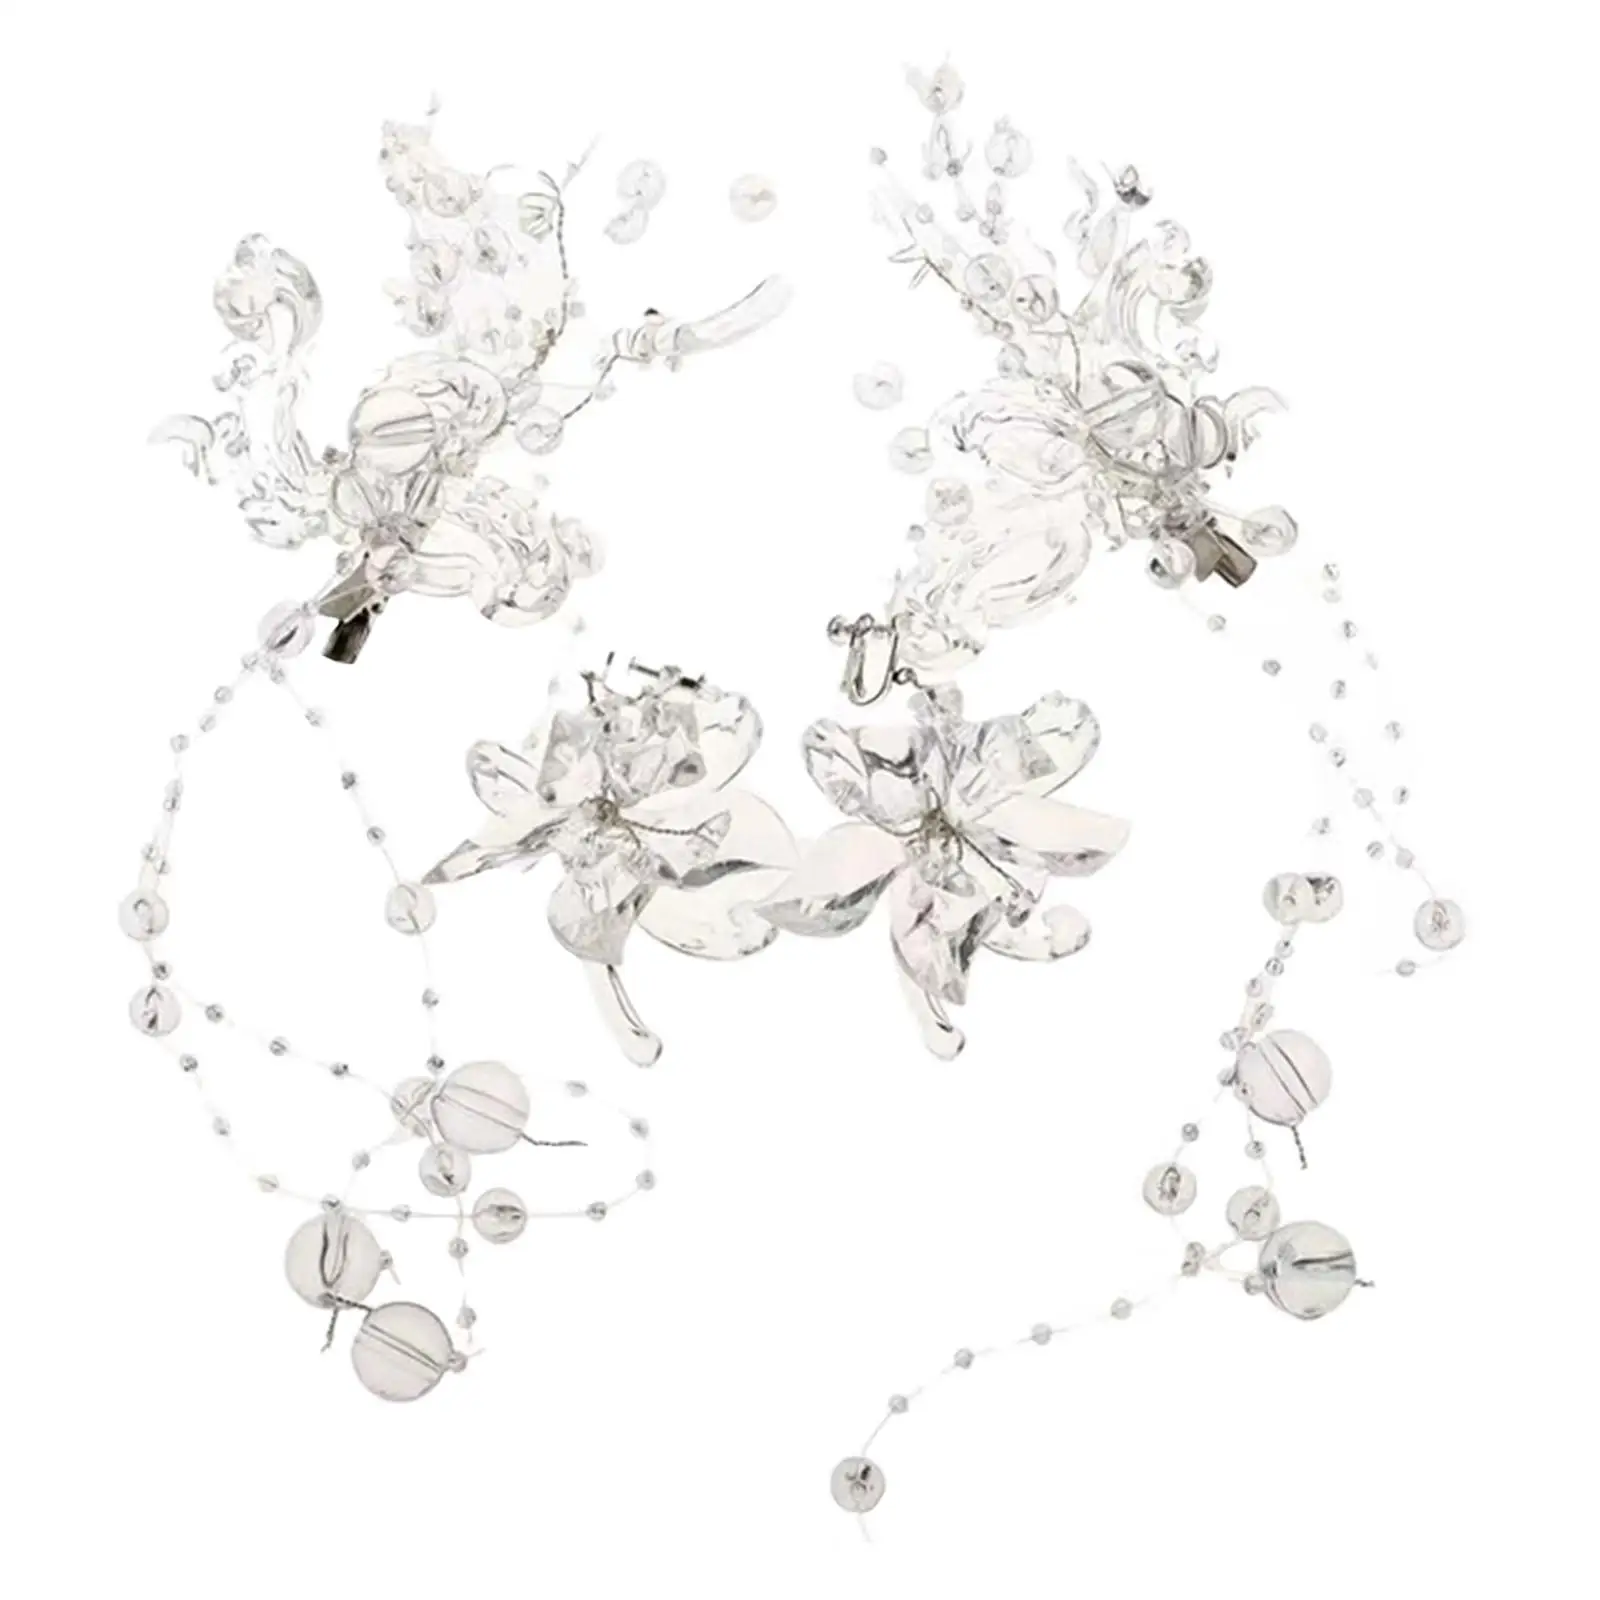  Hair Pins and Earrings Set Rhinestone Bridal Hair Clips Pins for Bride Bridesmaids Women (Silver)